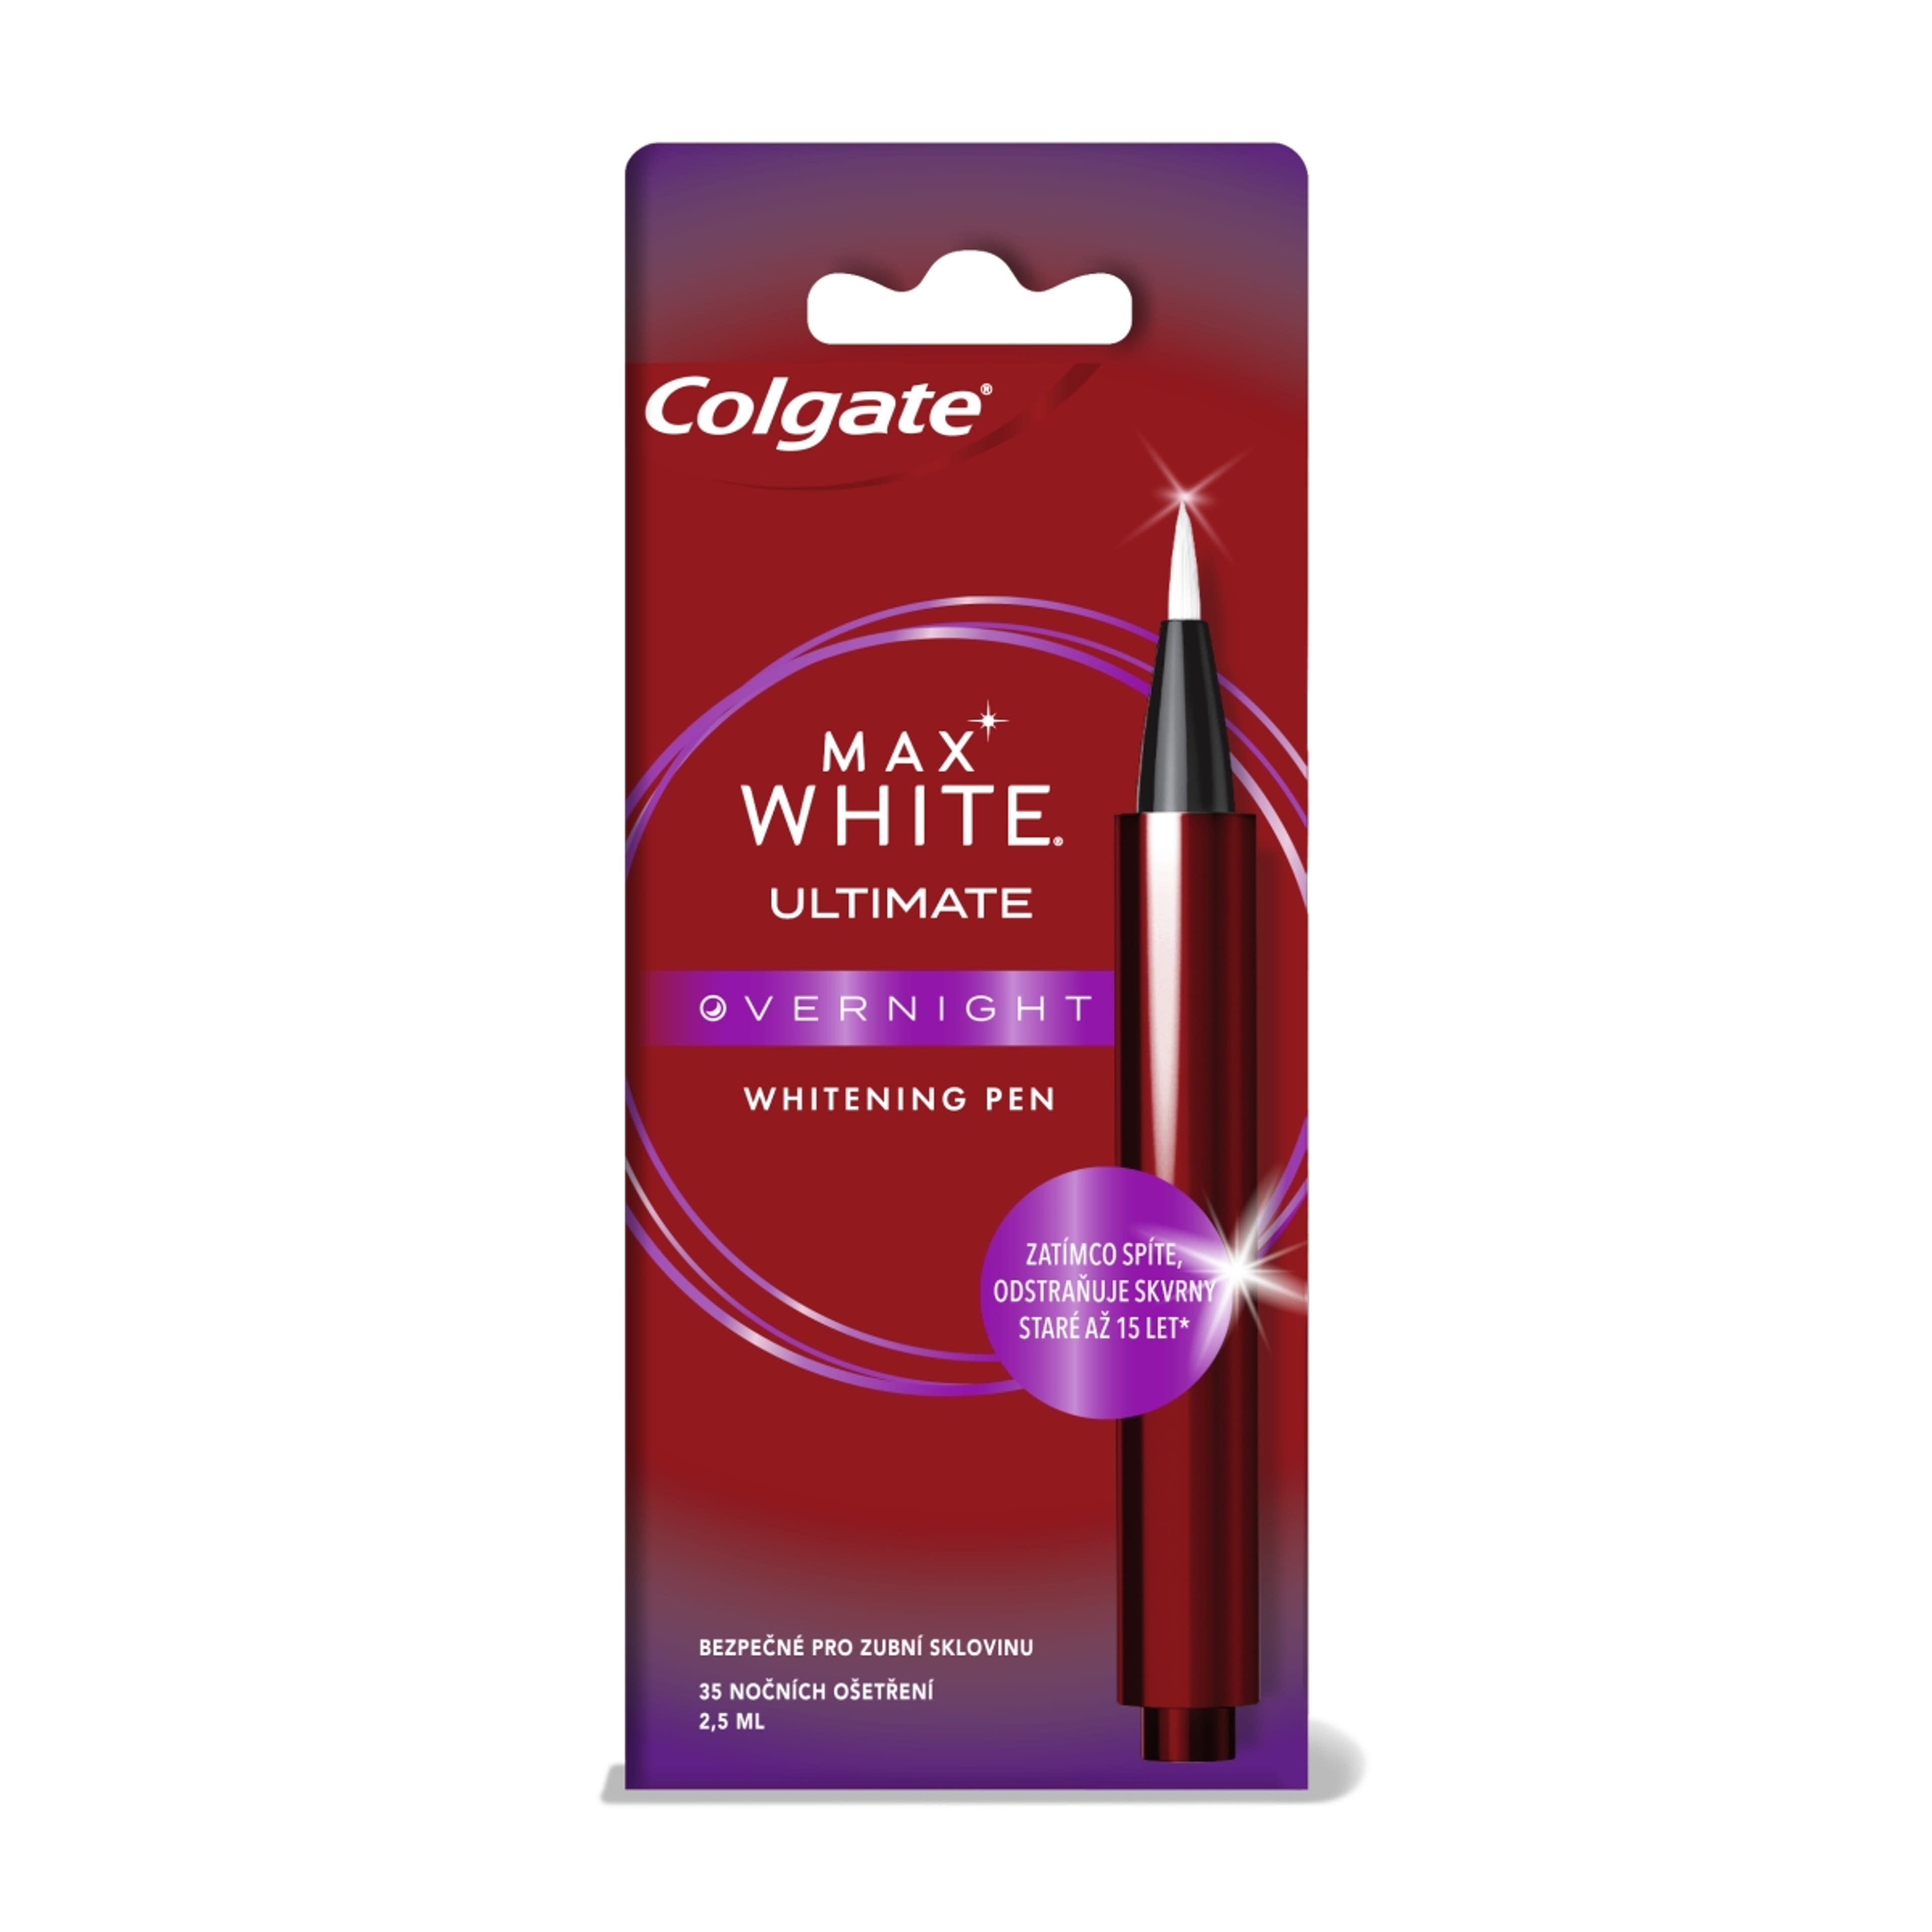 Colgate Max White Ultimate éjszakai fogfehérítő toll - 2,5 ml-2